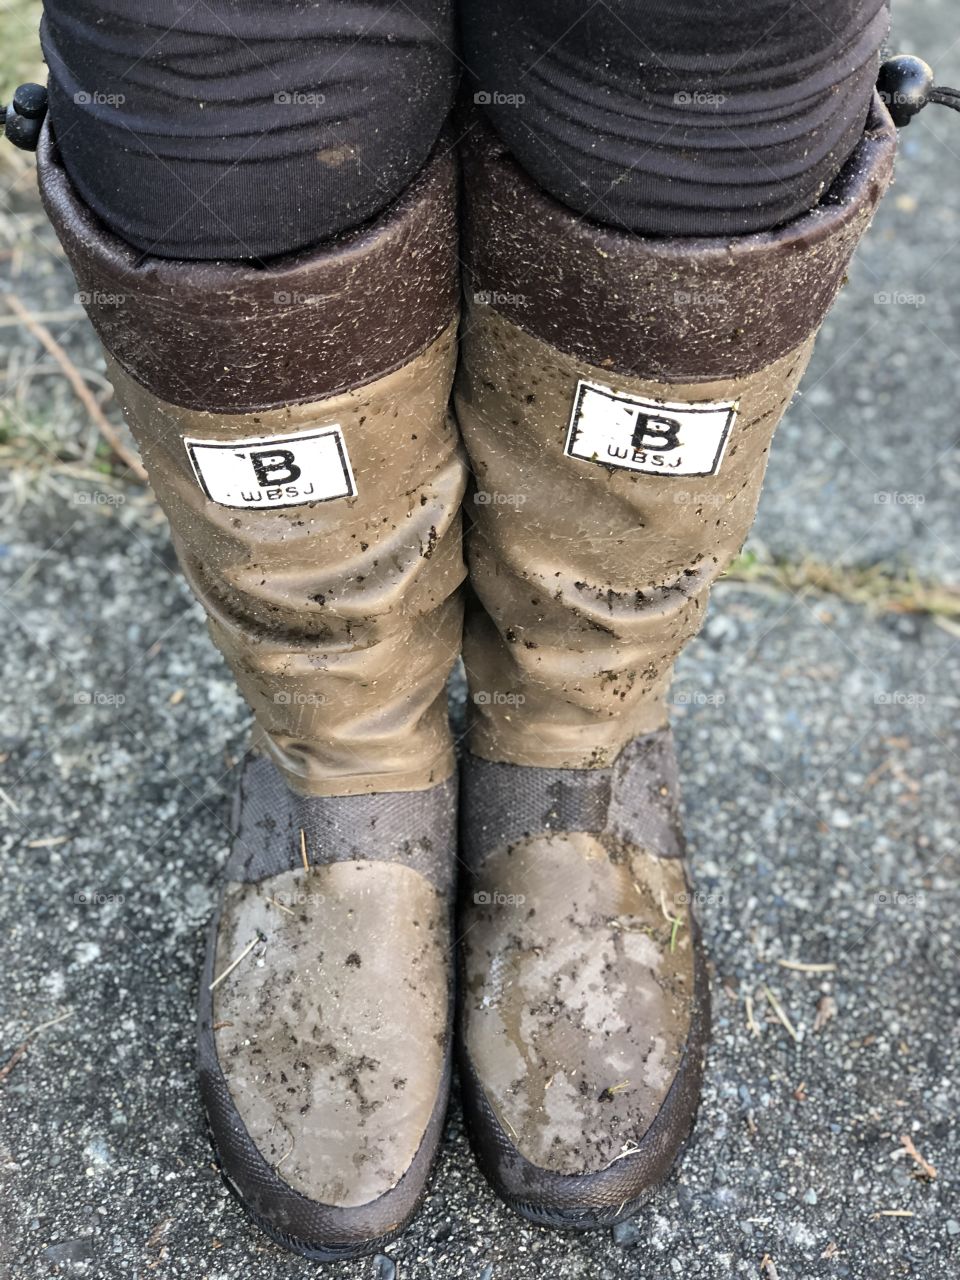 Muddy boots on feet